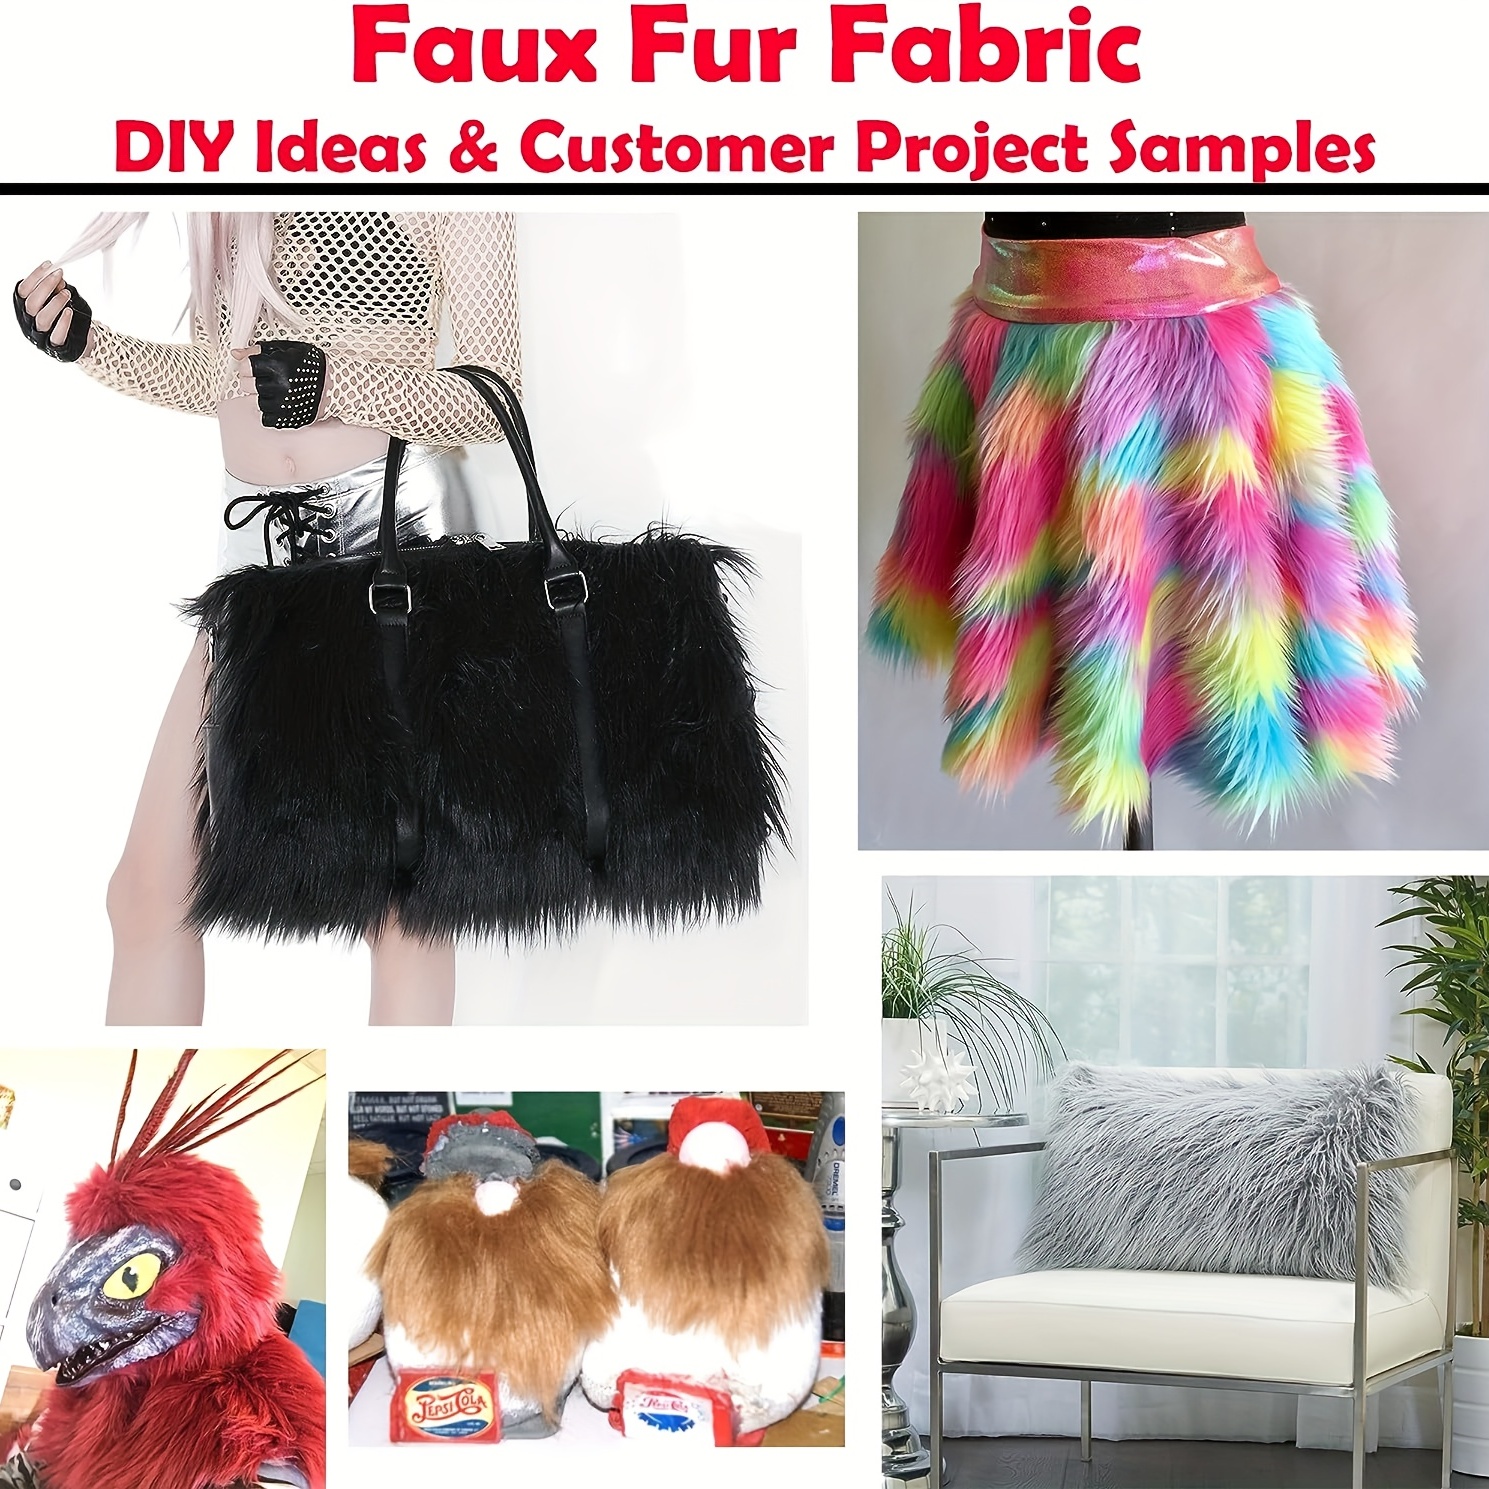 Yurdon Faux Fur Fabric craft Fur for crafts,gnomes,costume,Fursuit,Decoration,60A18  Inch(Half Yard,Red)